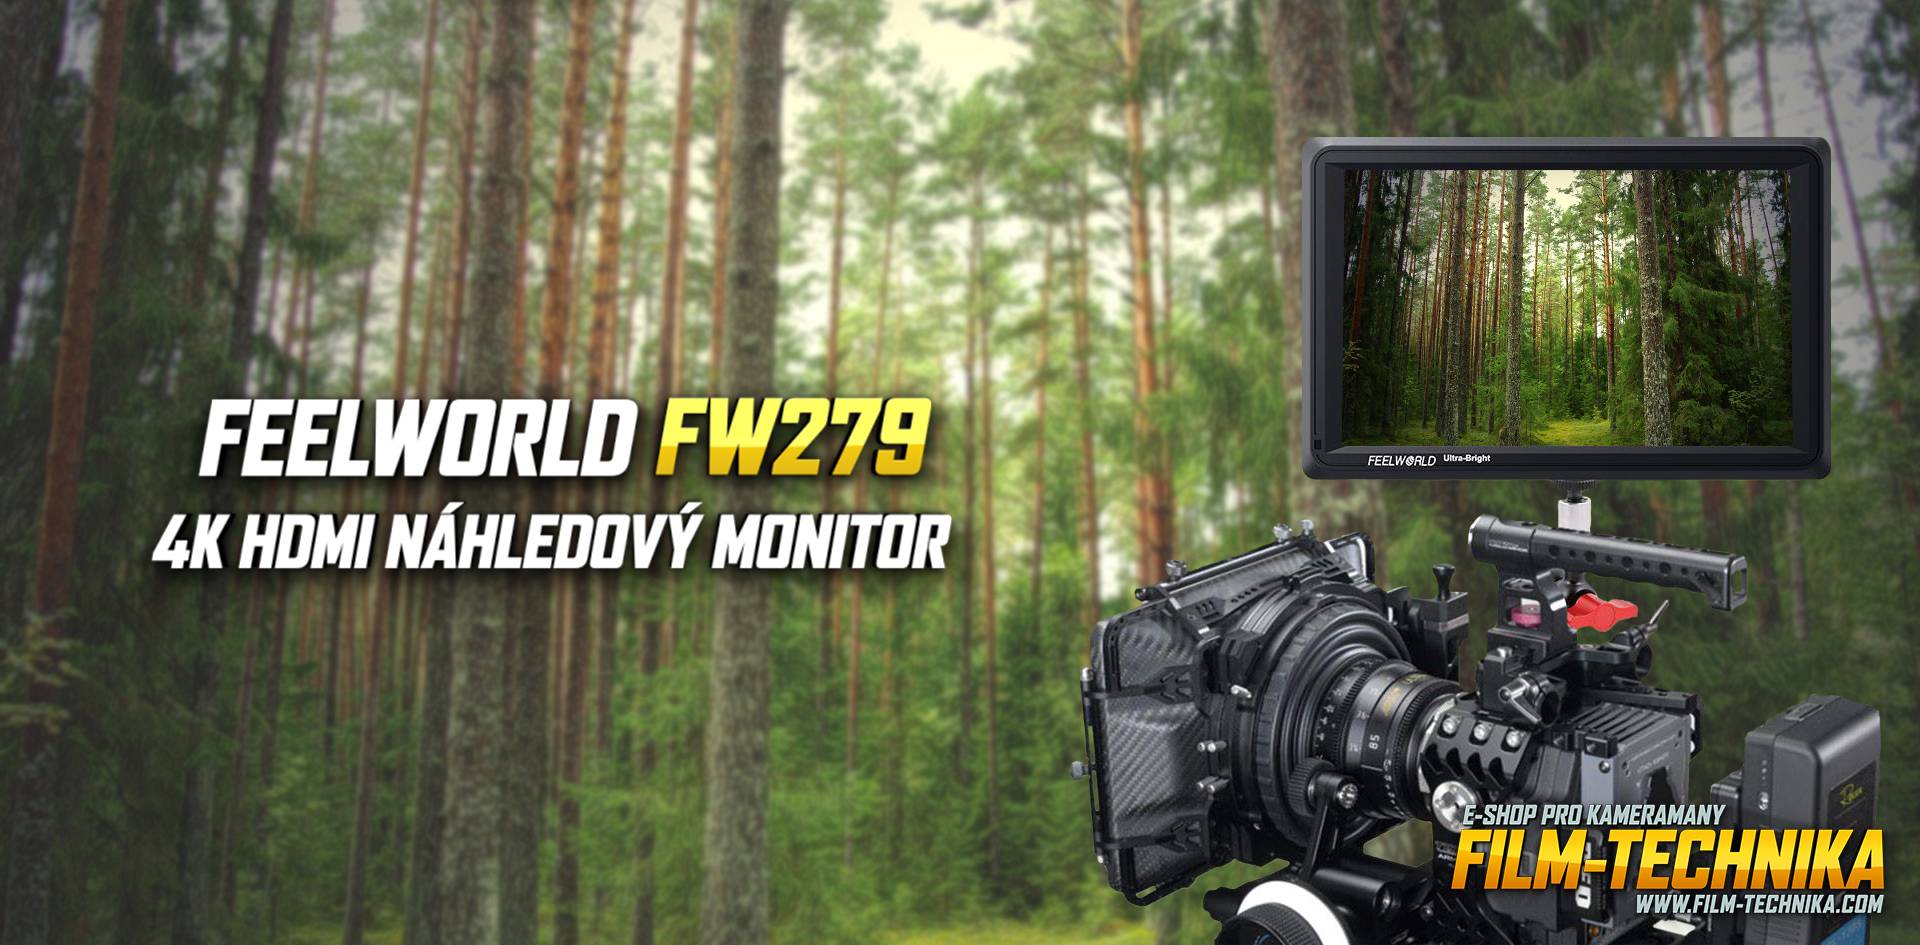 film-technika-feelworld-fw279-4k-hdmi-monitor-uvodní